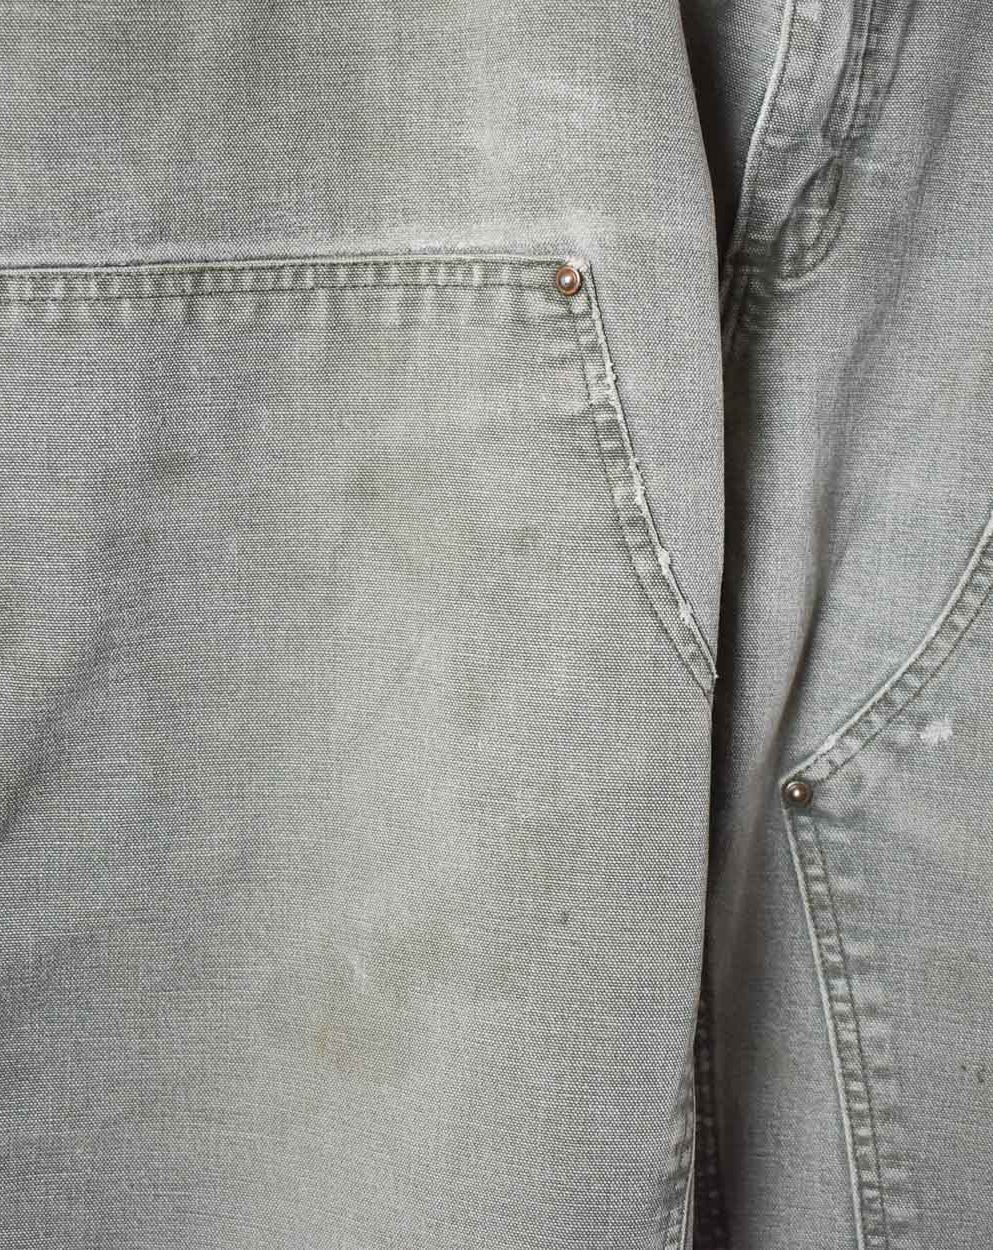 Khaki Carhartt Distressed Double Knee Carpenter Jeans - W38 L29